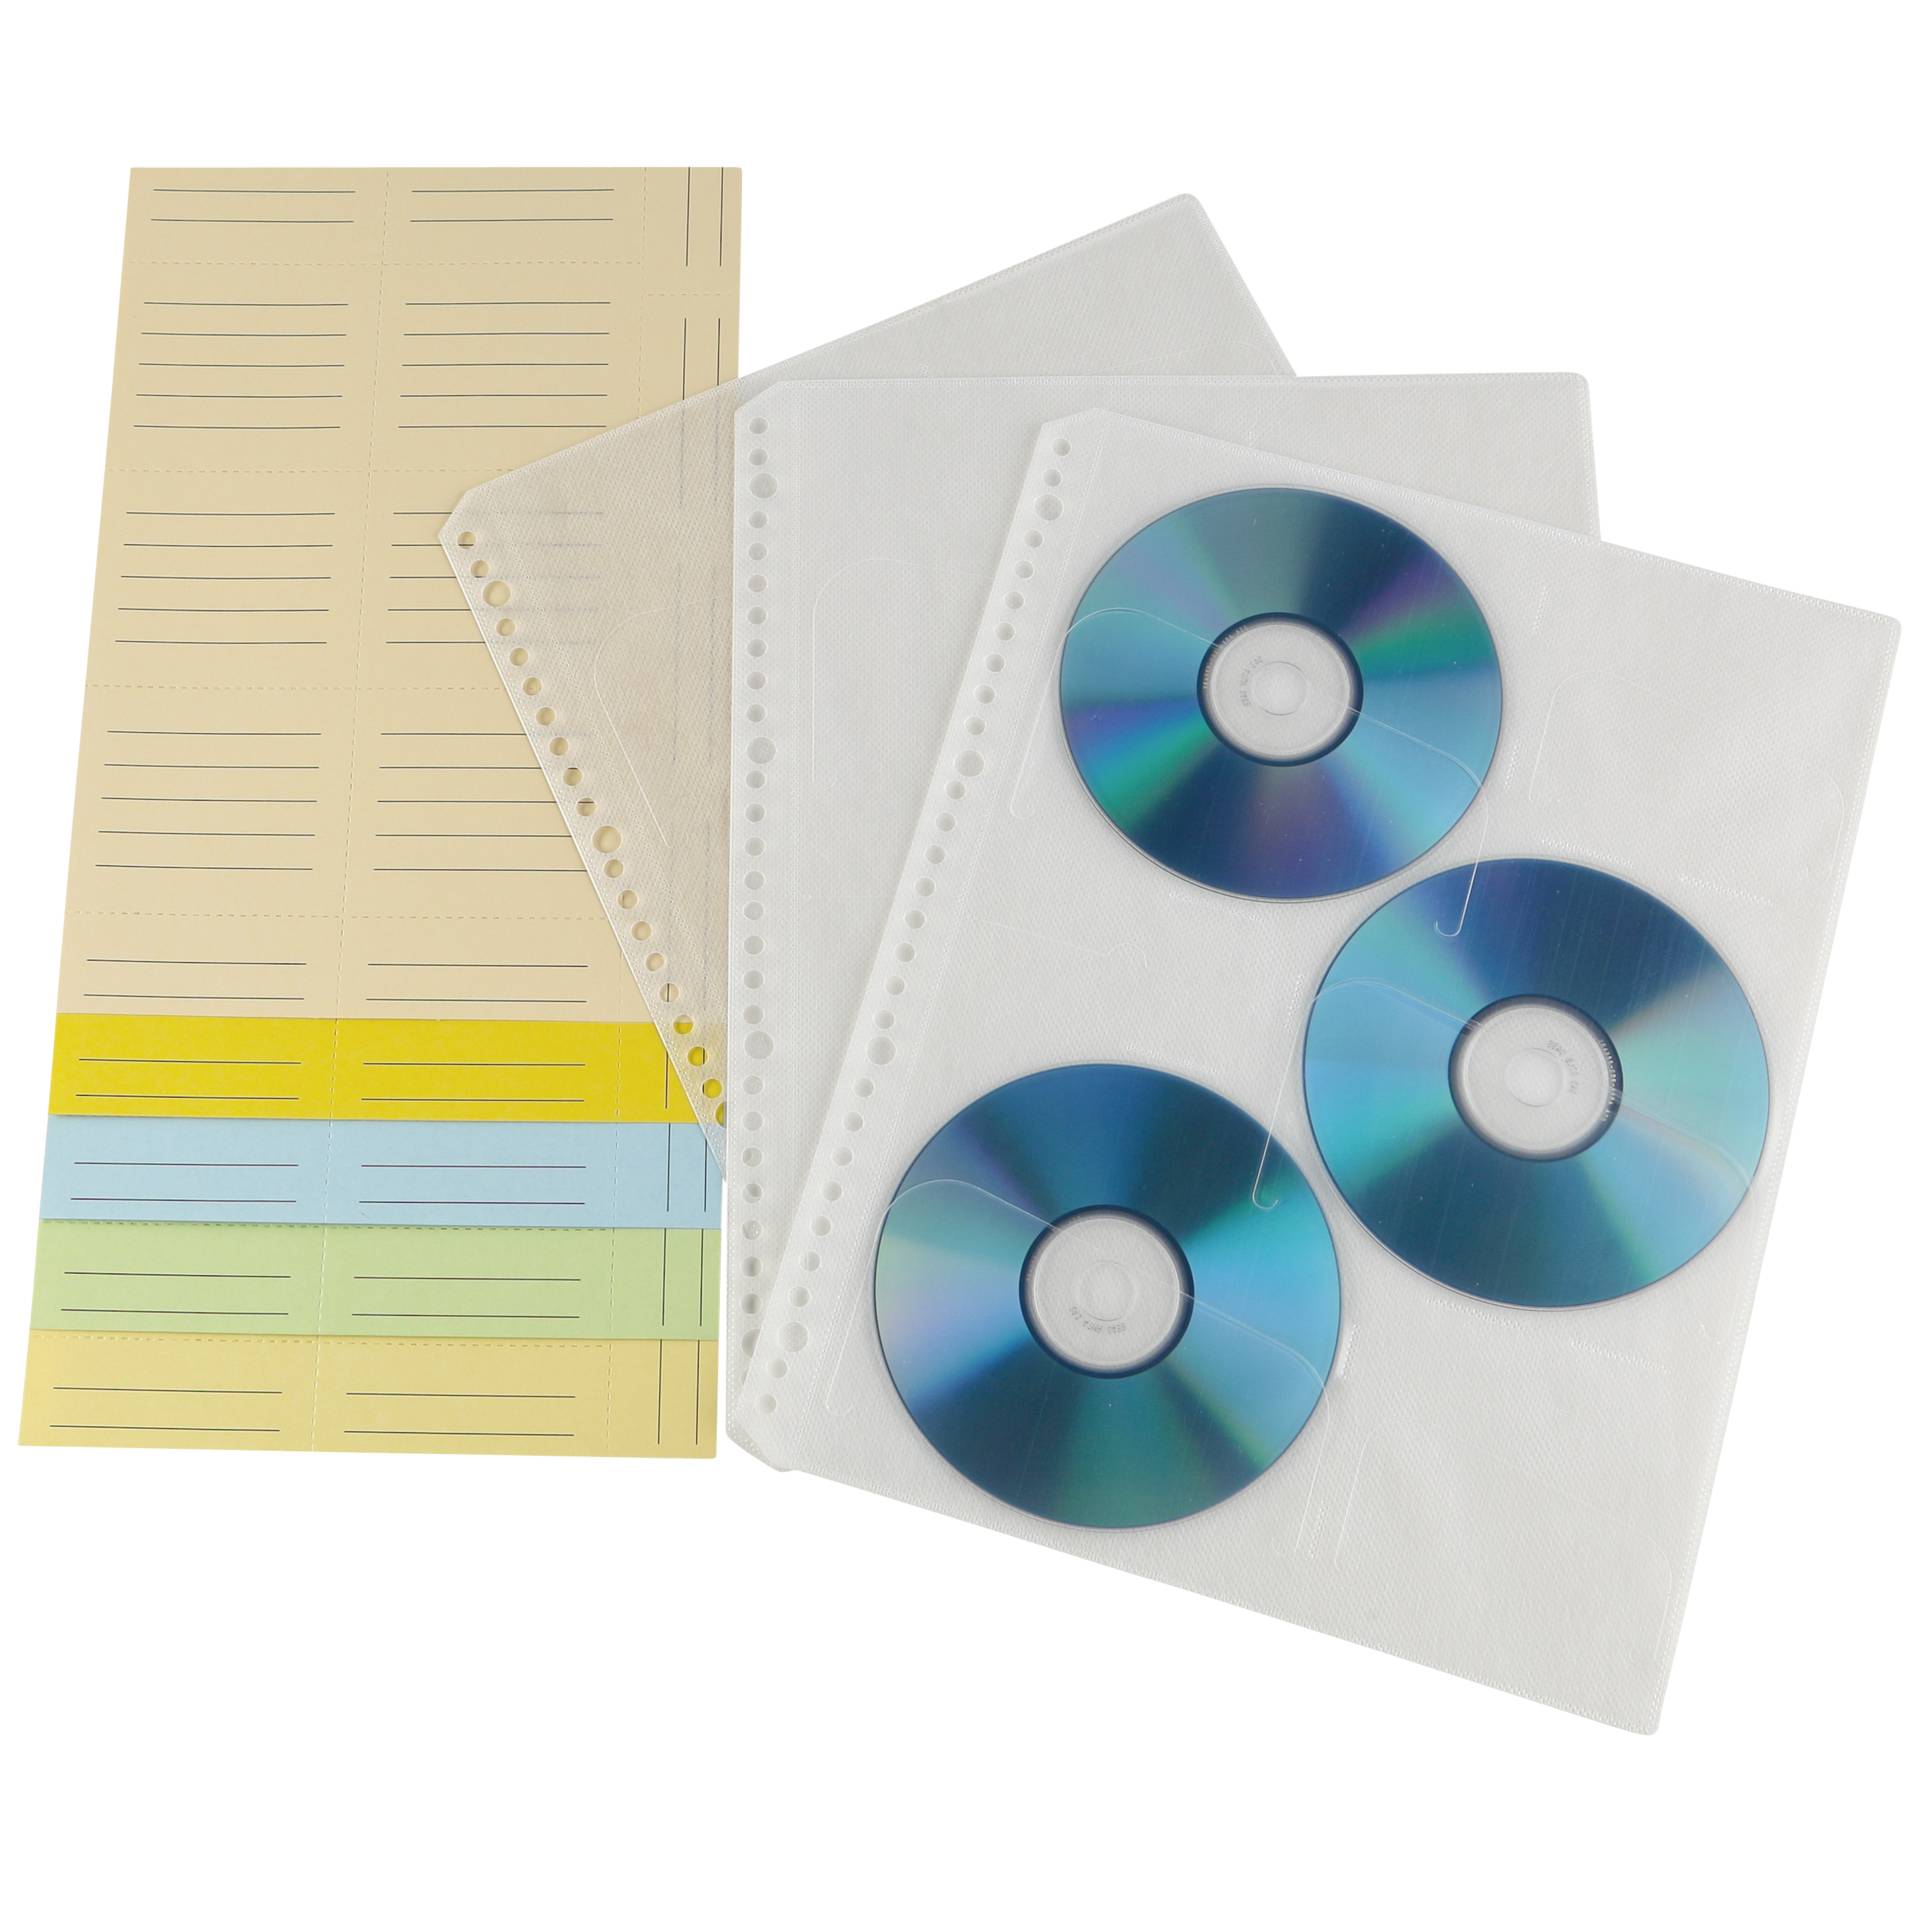 1x10 Hama CD-ROM-Index-Custodia trasparente-bianco        49